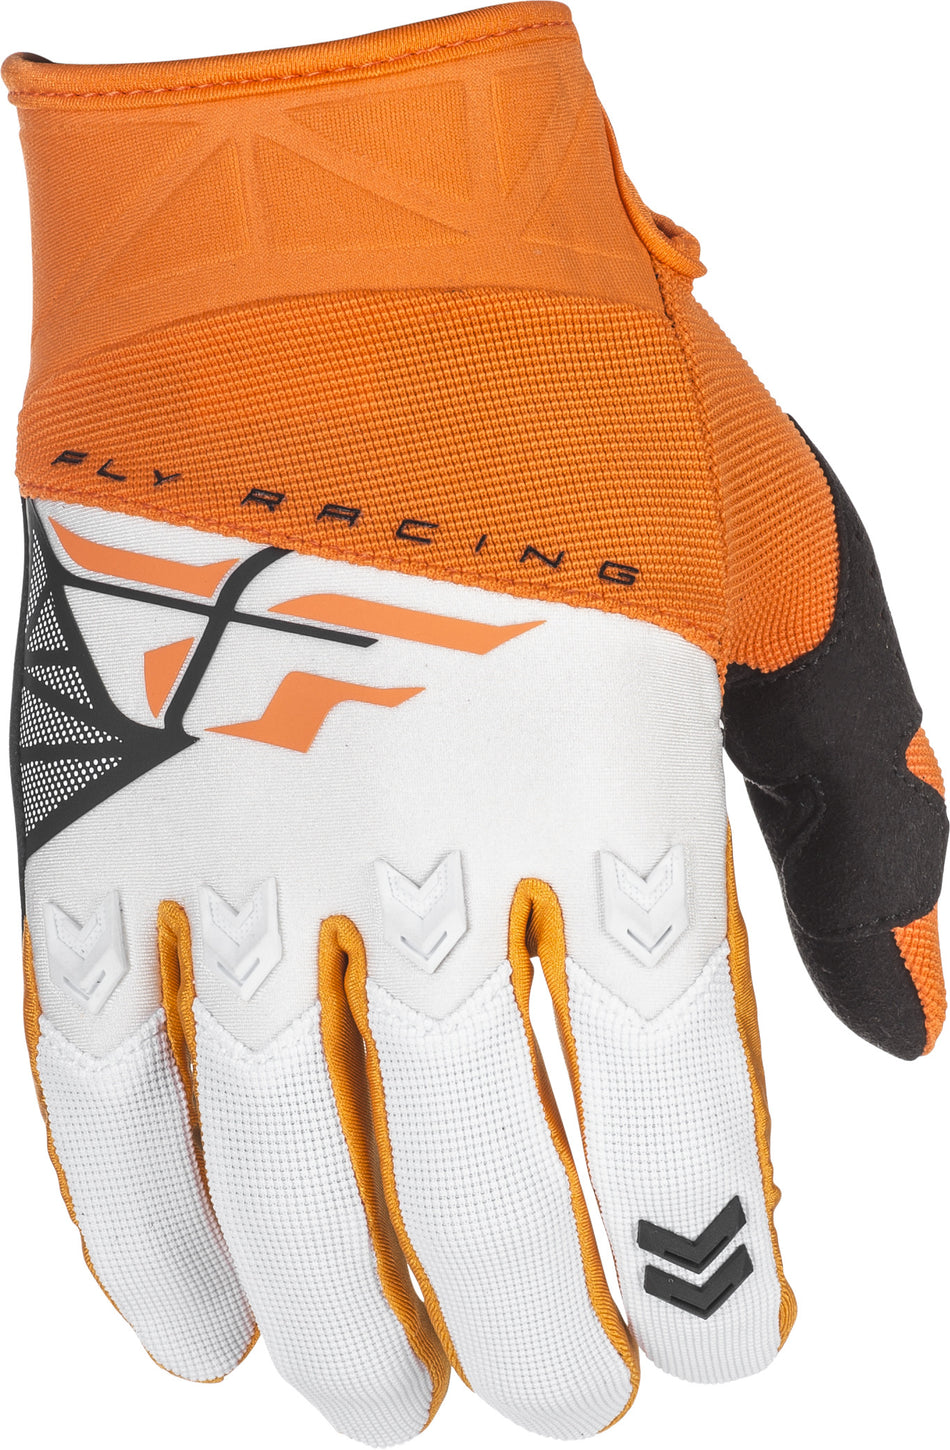 FLY RACING F-16 Gloves Orange/White Sz 4 371-91804